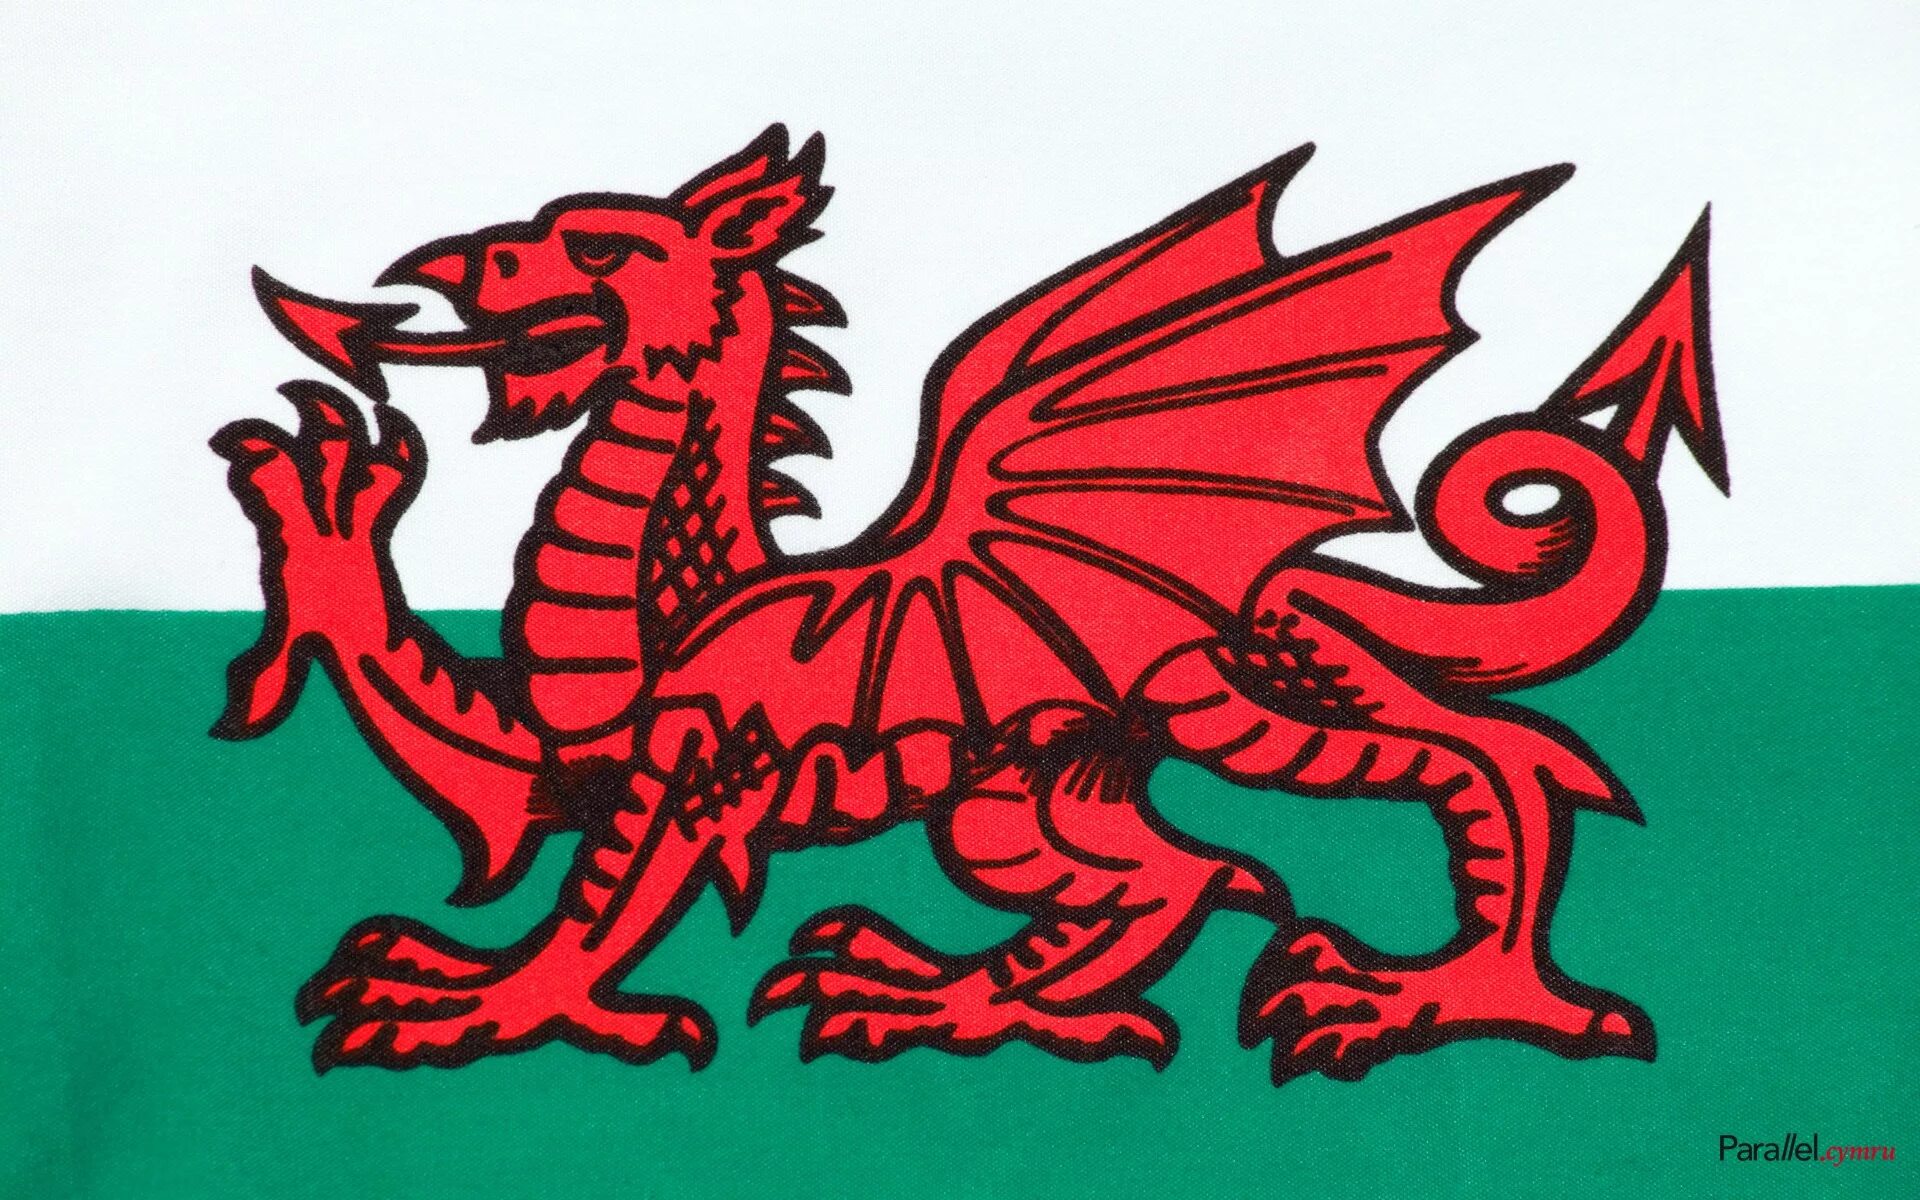 Дракон какая страна. Национальный флаг Уэльса. Wales Cardiff флаг. Красный дракон на флаге Уэльса. Уэльс флаг и герб.